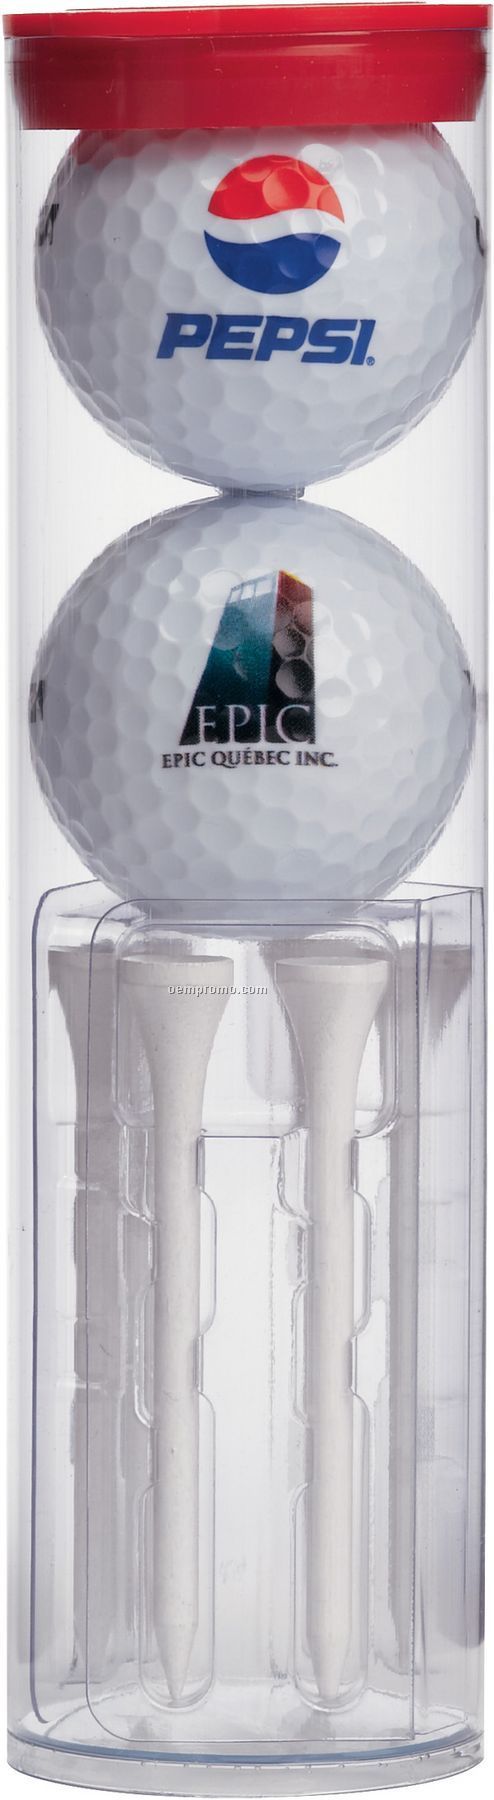 Wilson Eco-core Golf Ball (2011) - 2-ball Tube W/ 6 Tees